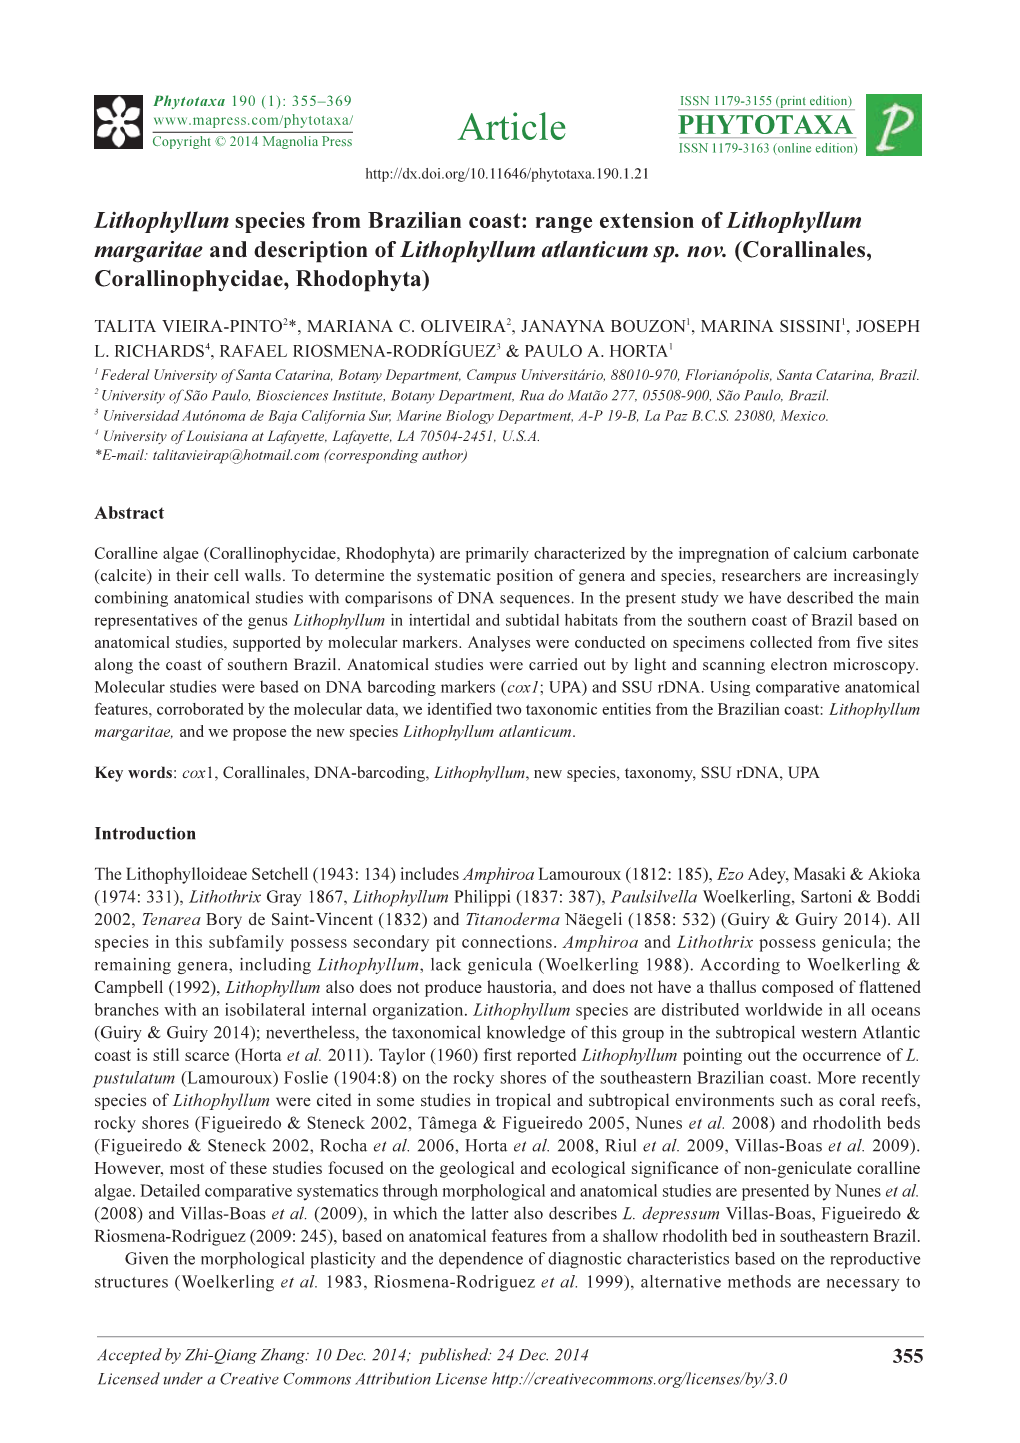 Lithophyllum Species from Brazilian Coast: Range Extension of Lithophyllum Margaritae and Description of Lithophyllum Atlanticum Sp